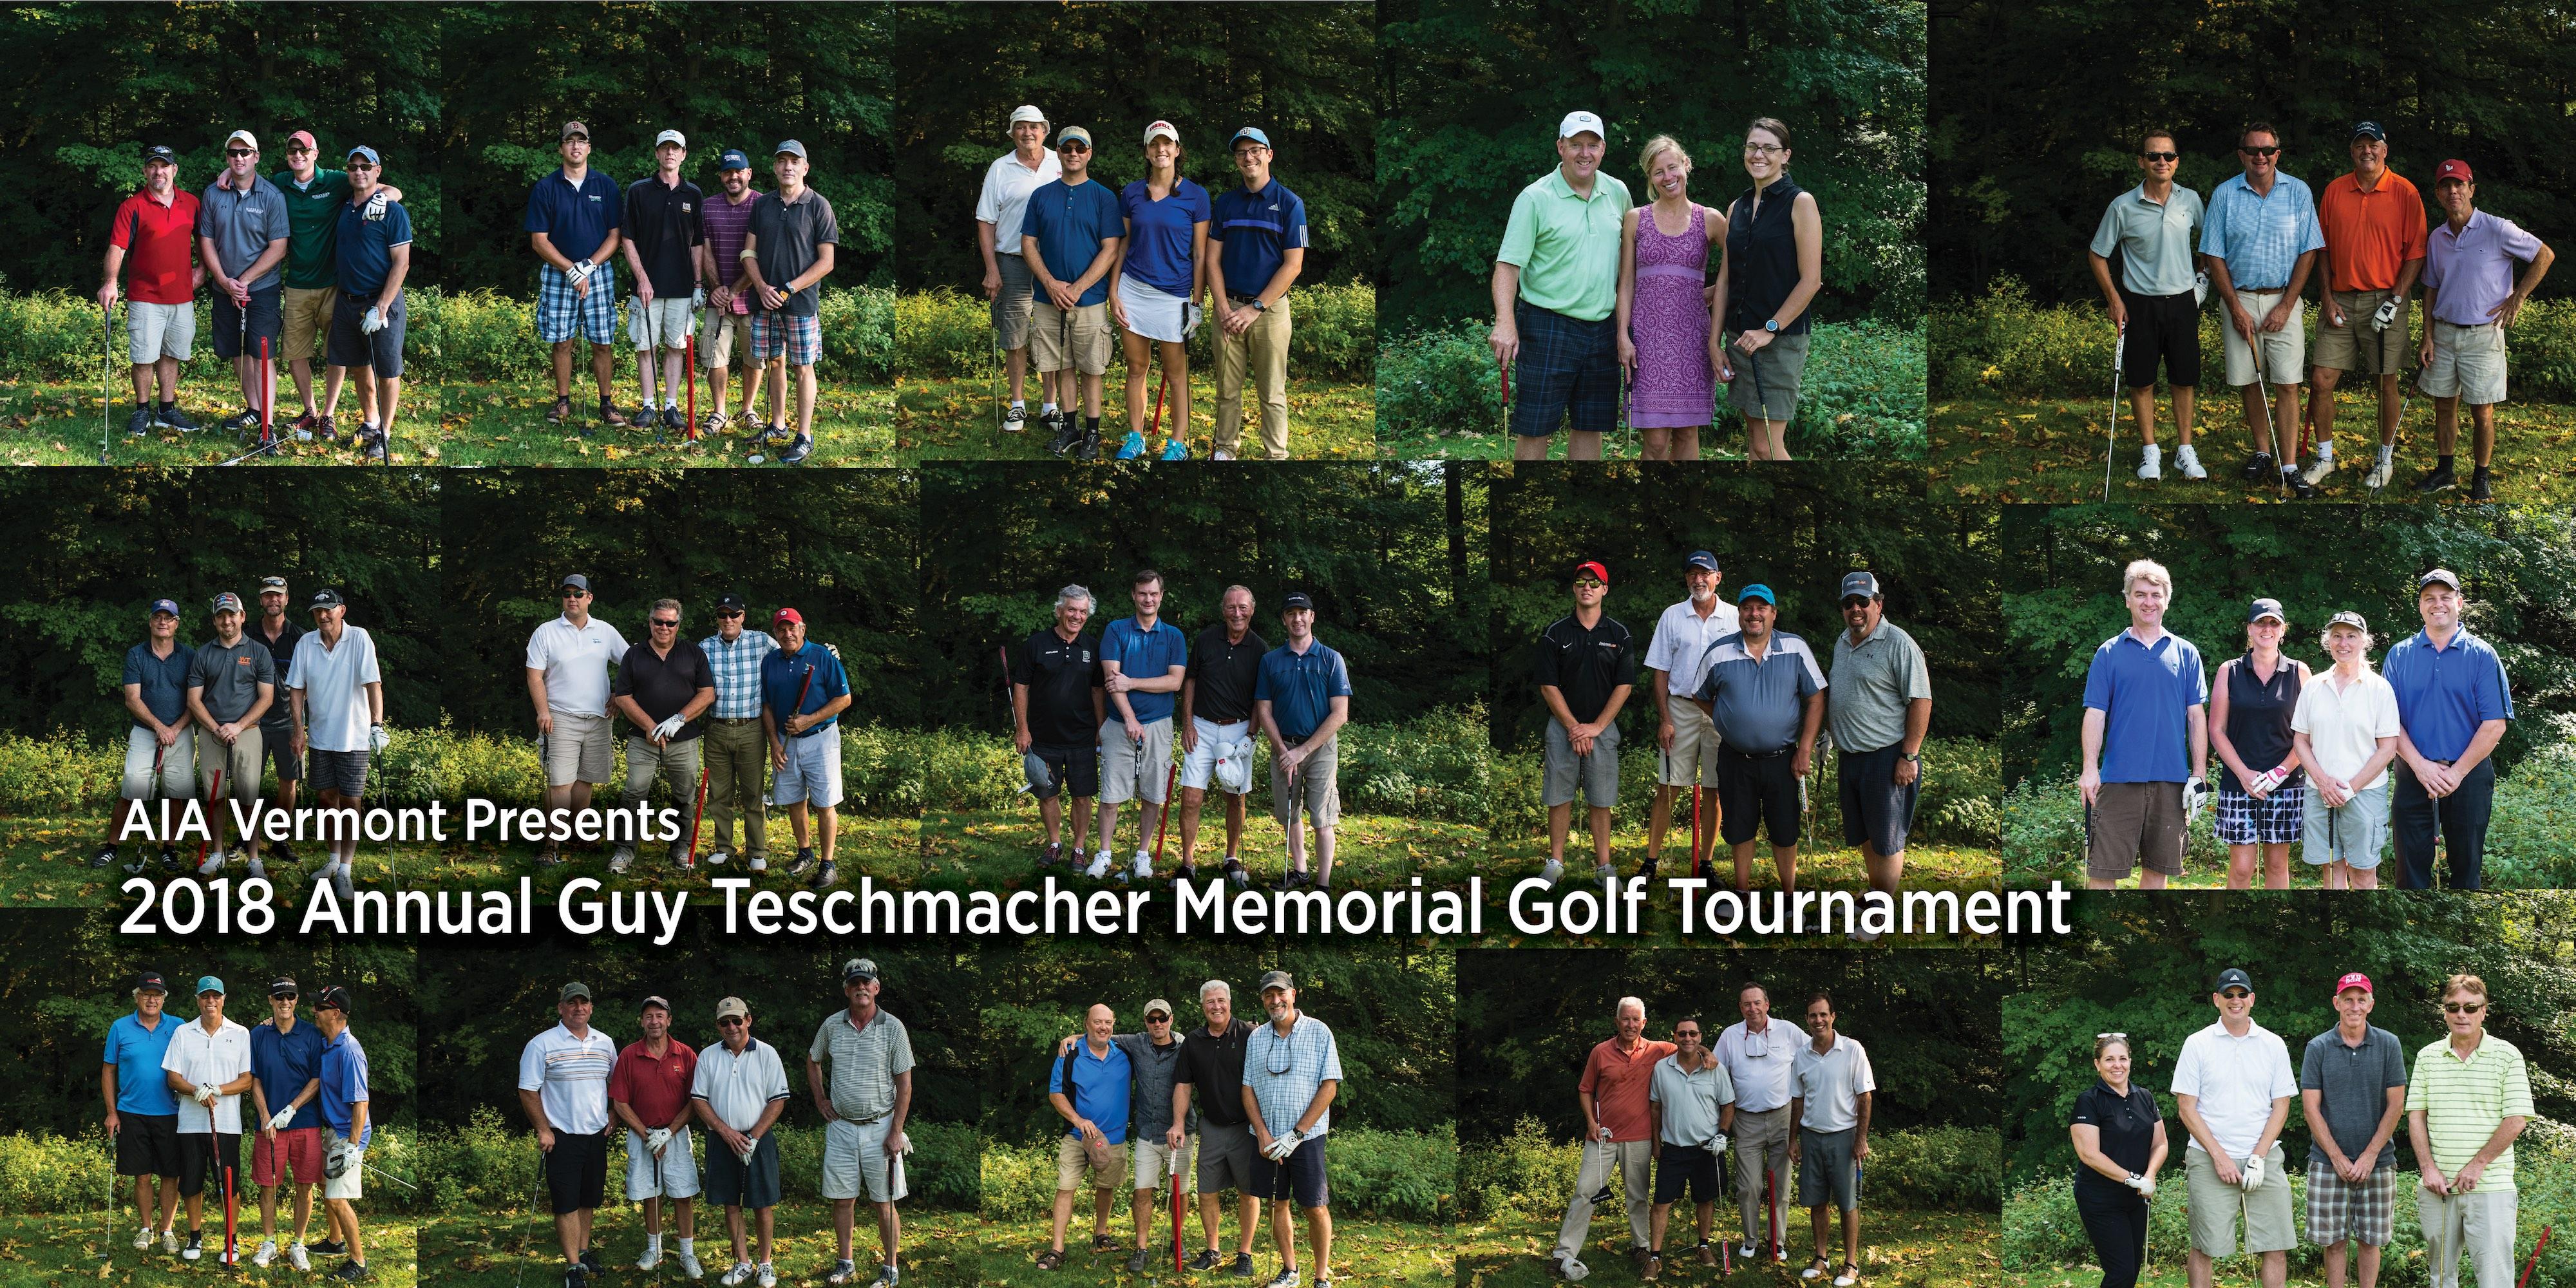 AIA Vermont's Annual Guy Teschmacher Memorial Golf Tournament 2018